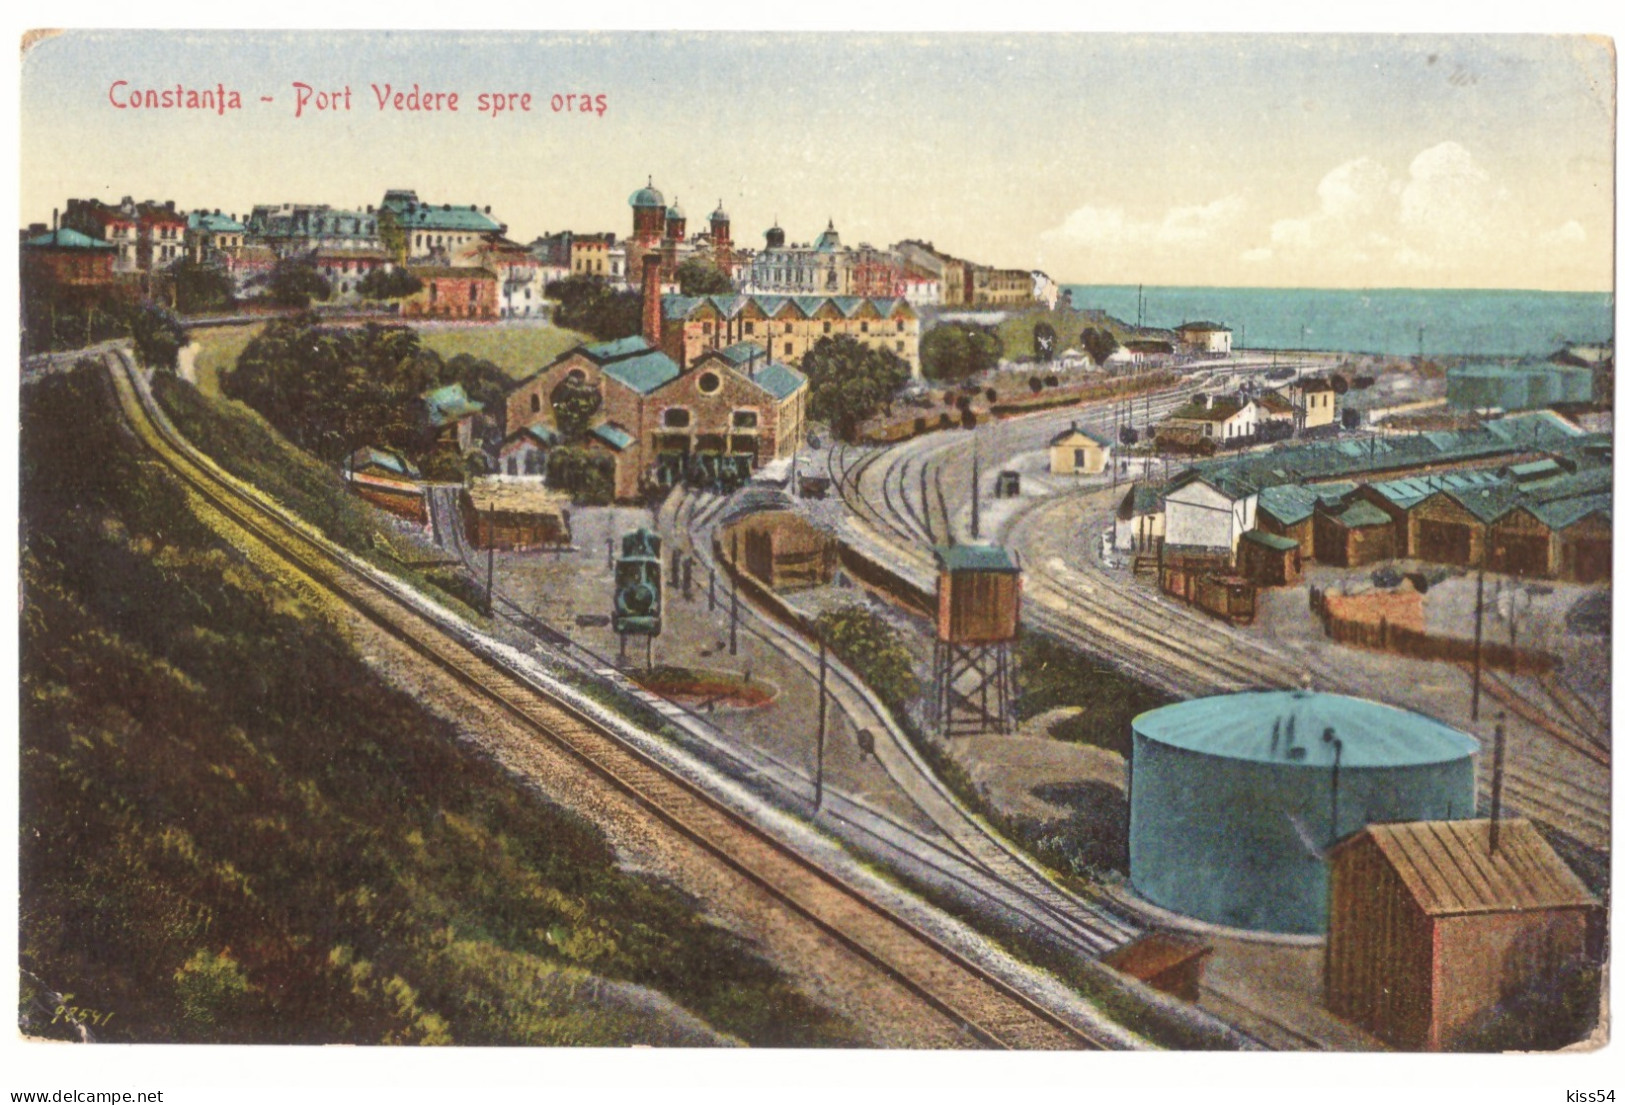 RO 38 - 21133 CONSTANTA, Harbor, Railways, Romania - Old Postcard - Unused - Romania